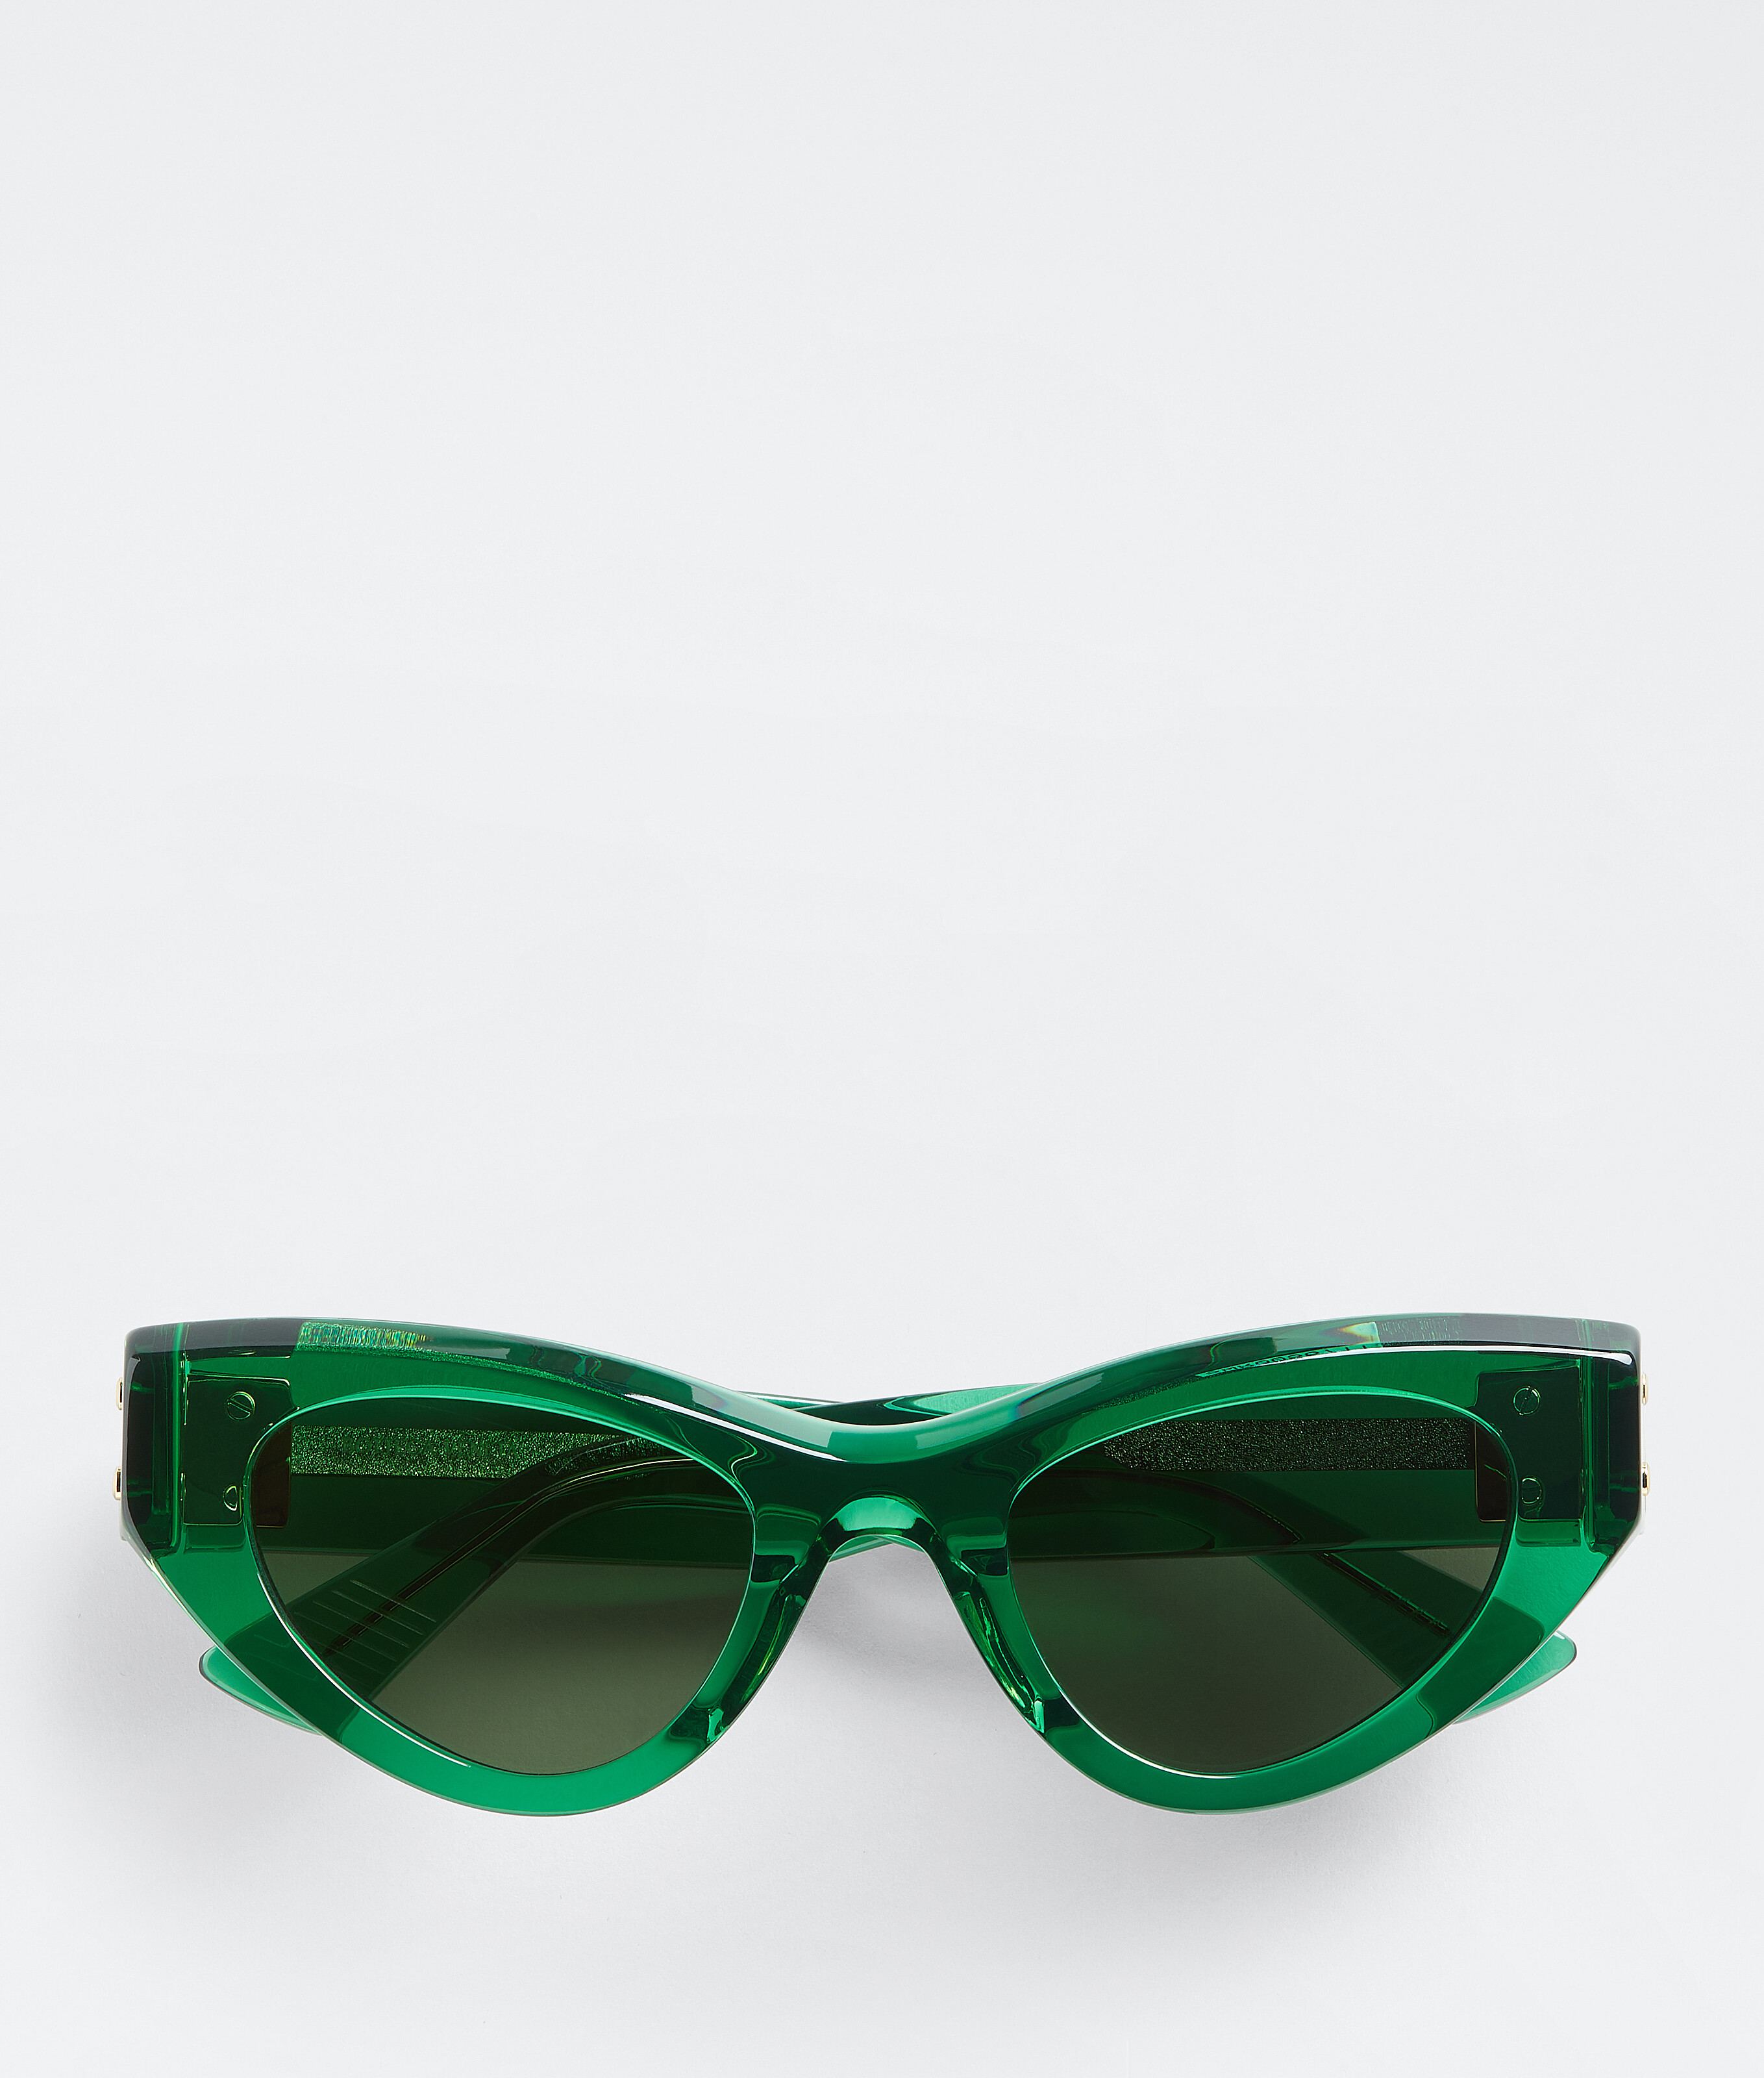 Bottega Veneta - The Original 04 Cat Eye Sunglasses - Green